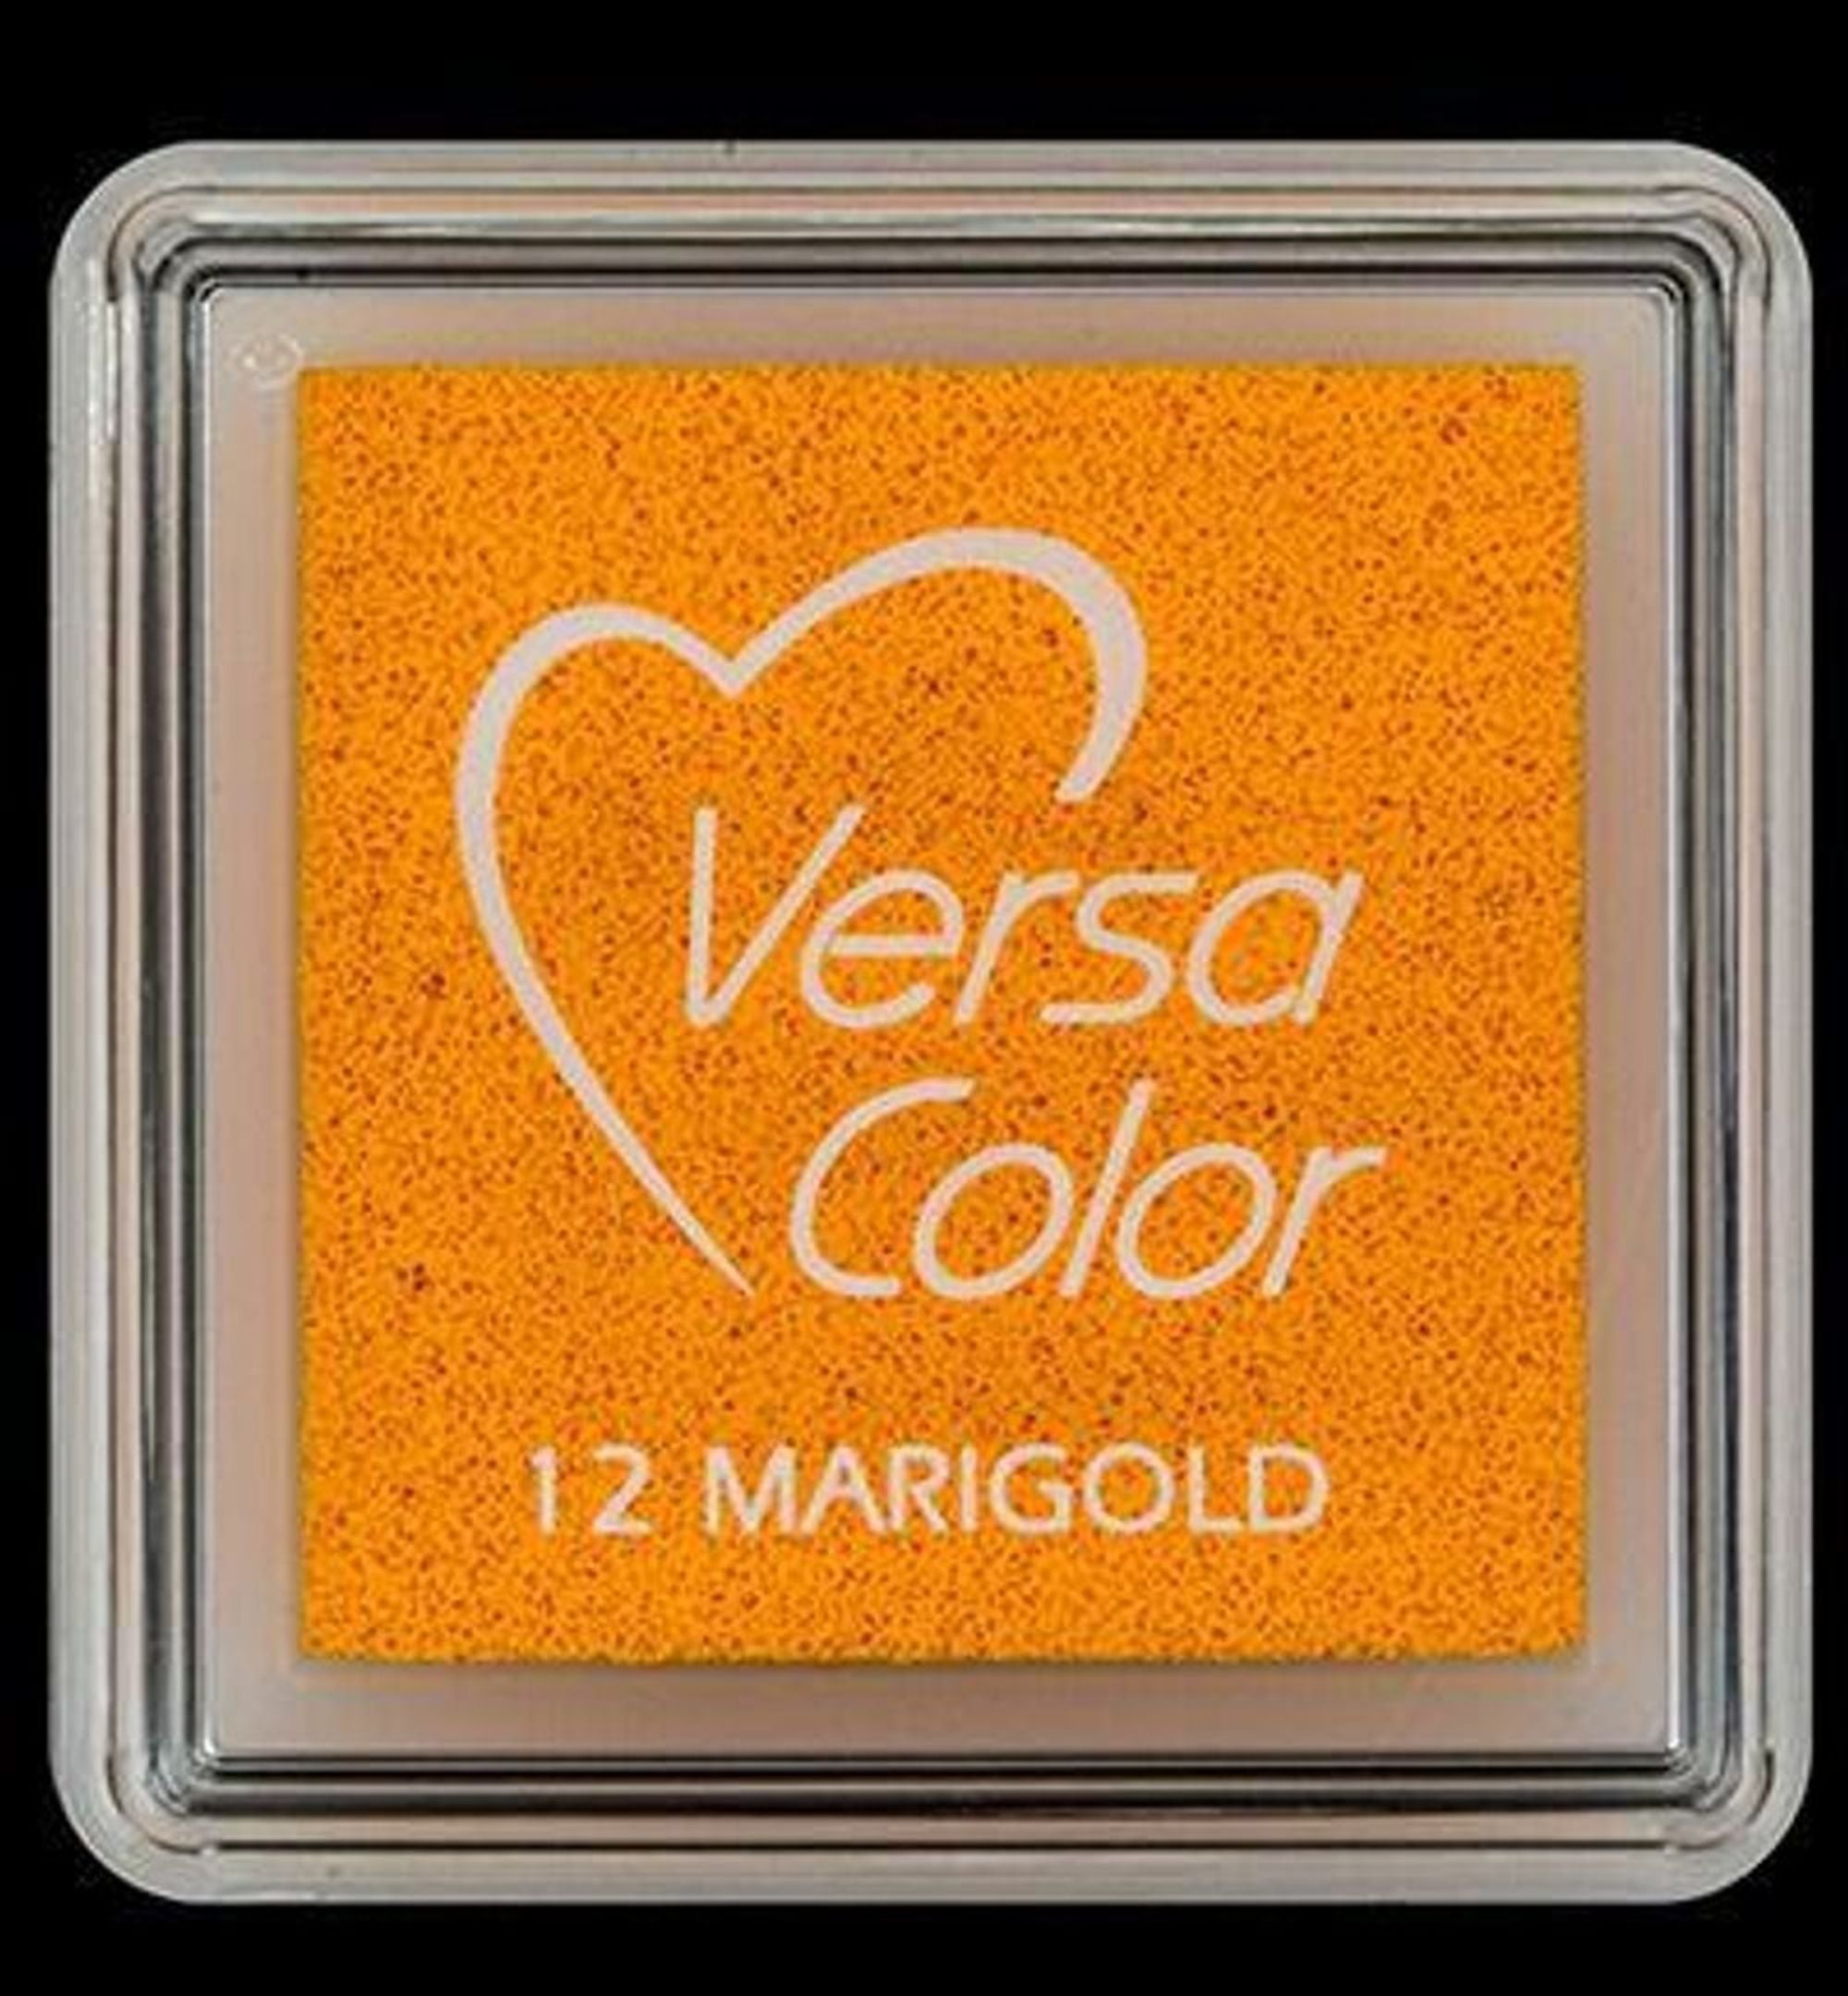 VersaColor Pigment Mini Ink Pad-Marigold - image 2 of 6